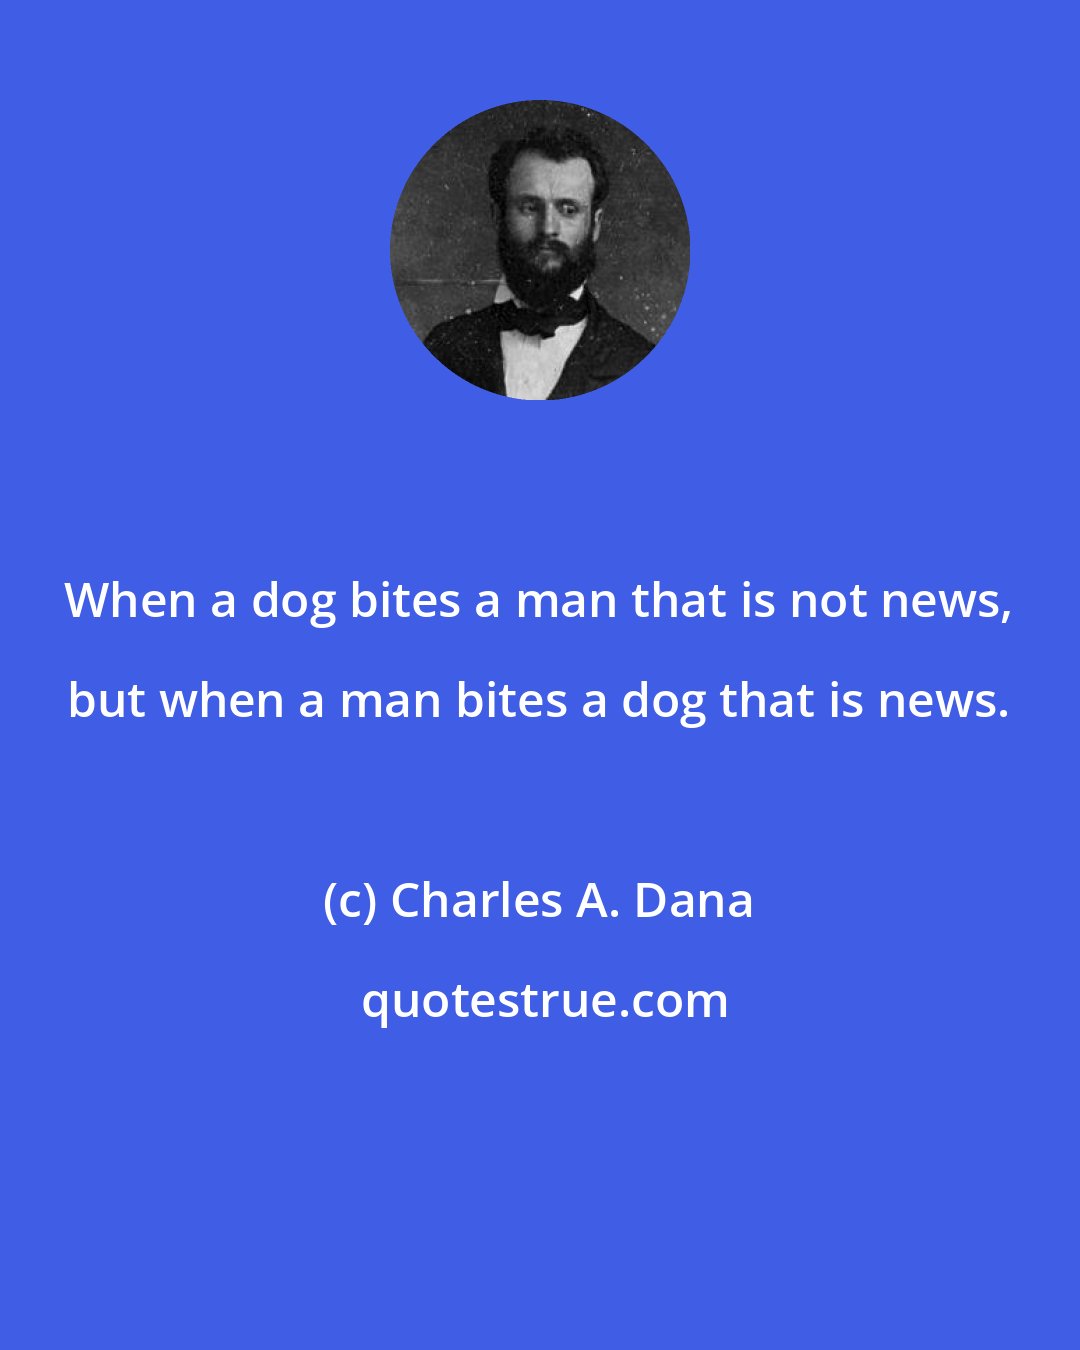 Charles A. Dana: When a dog bites a man that is not news, but when a man bites a dog that is news.